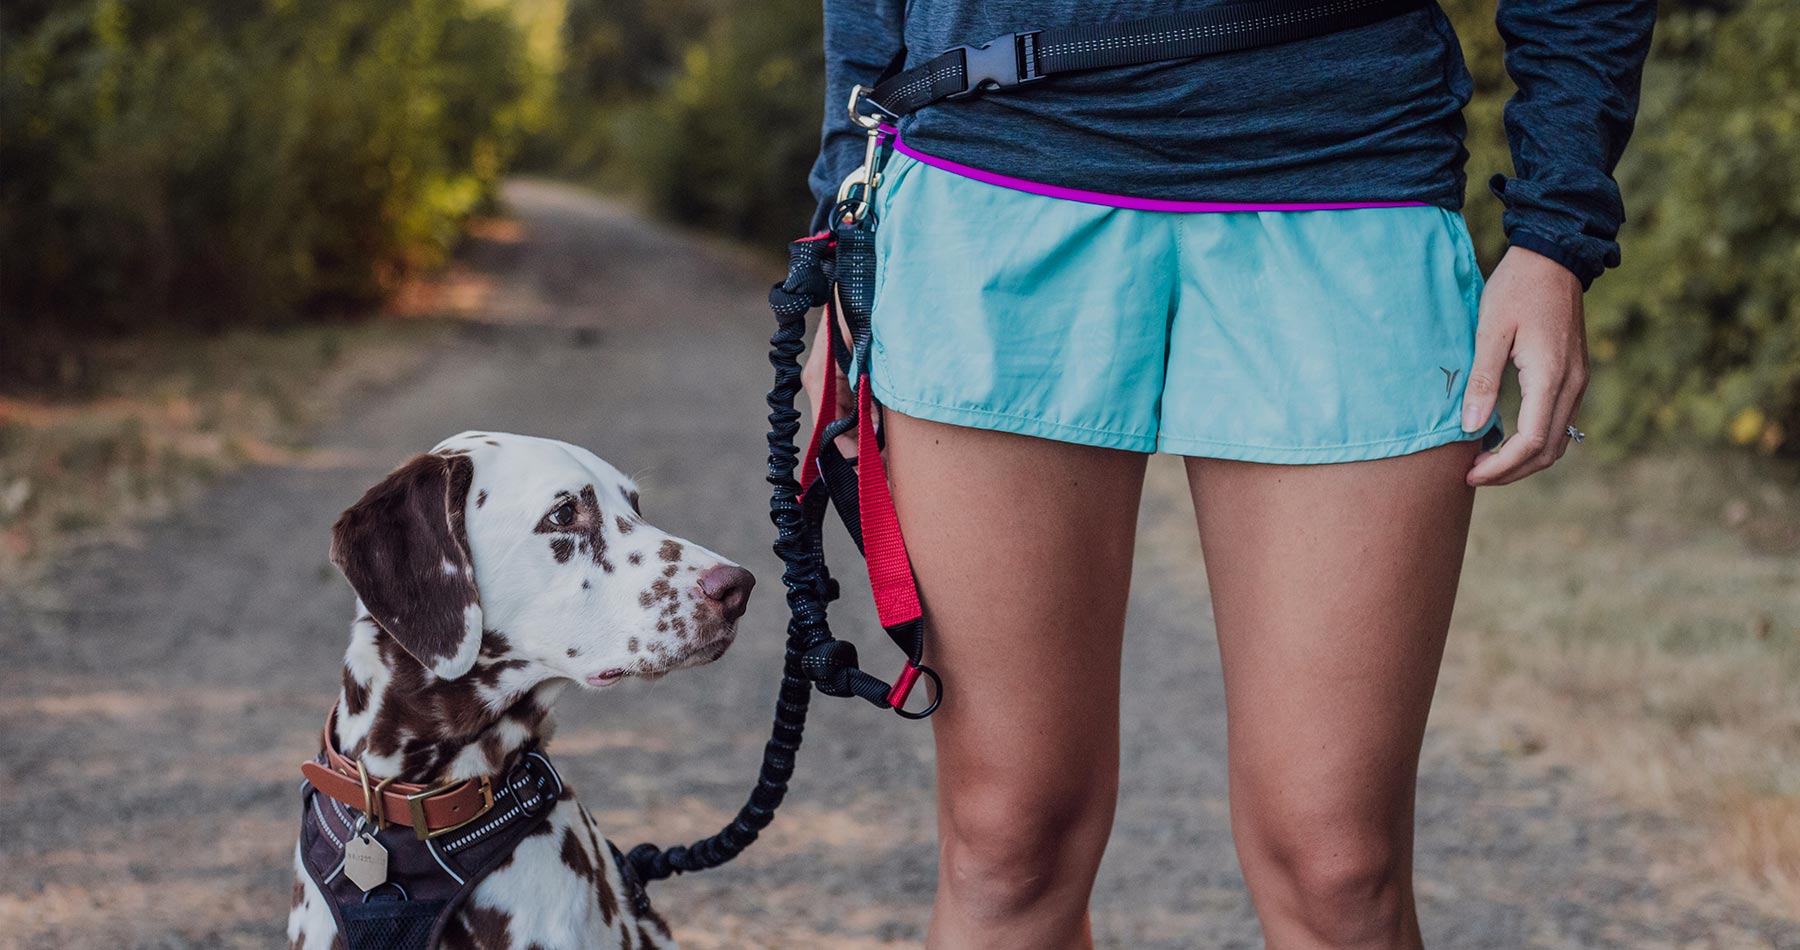 Iron Doggy hands-free dog leash with dog